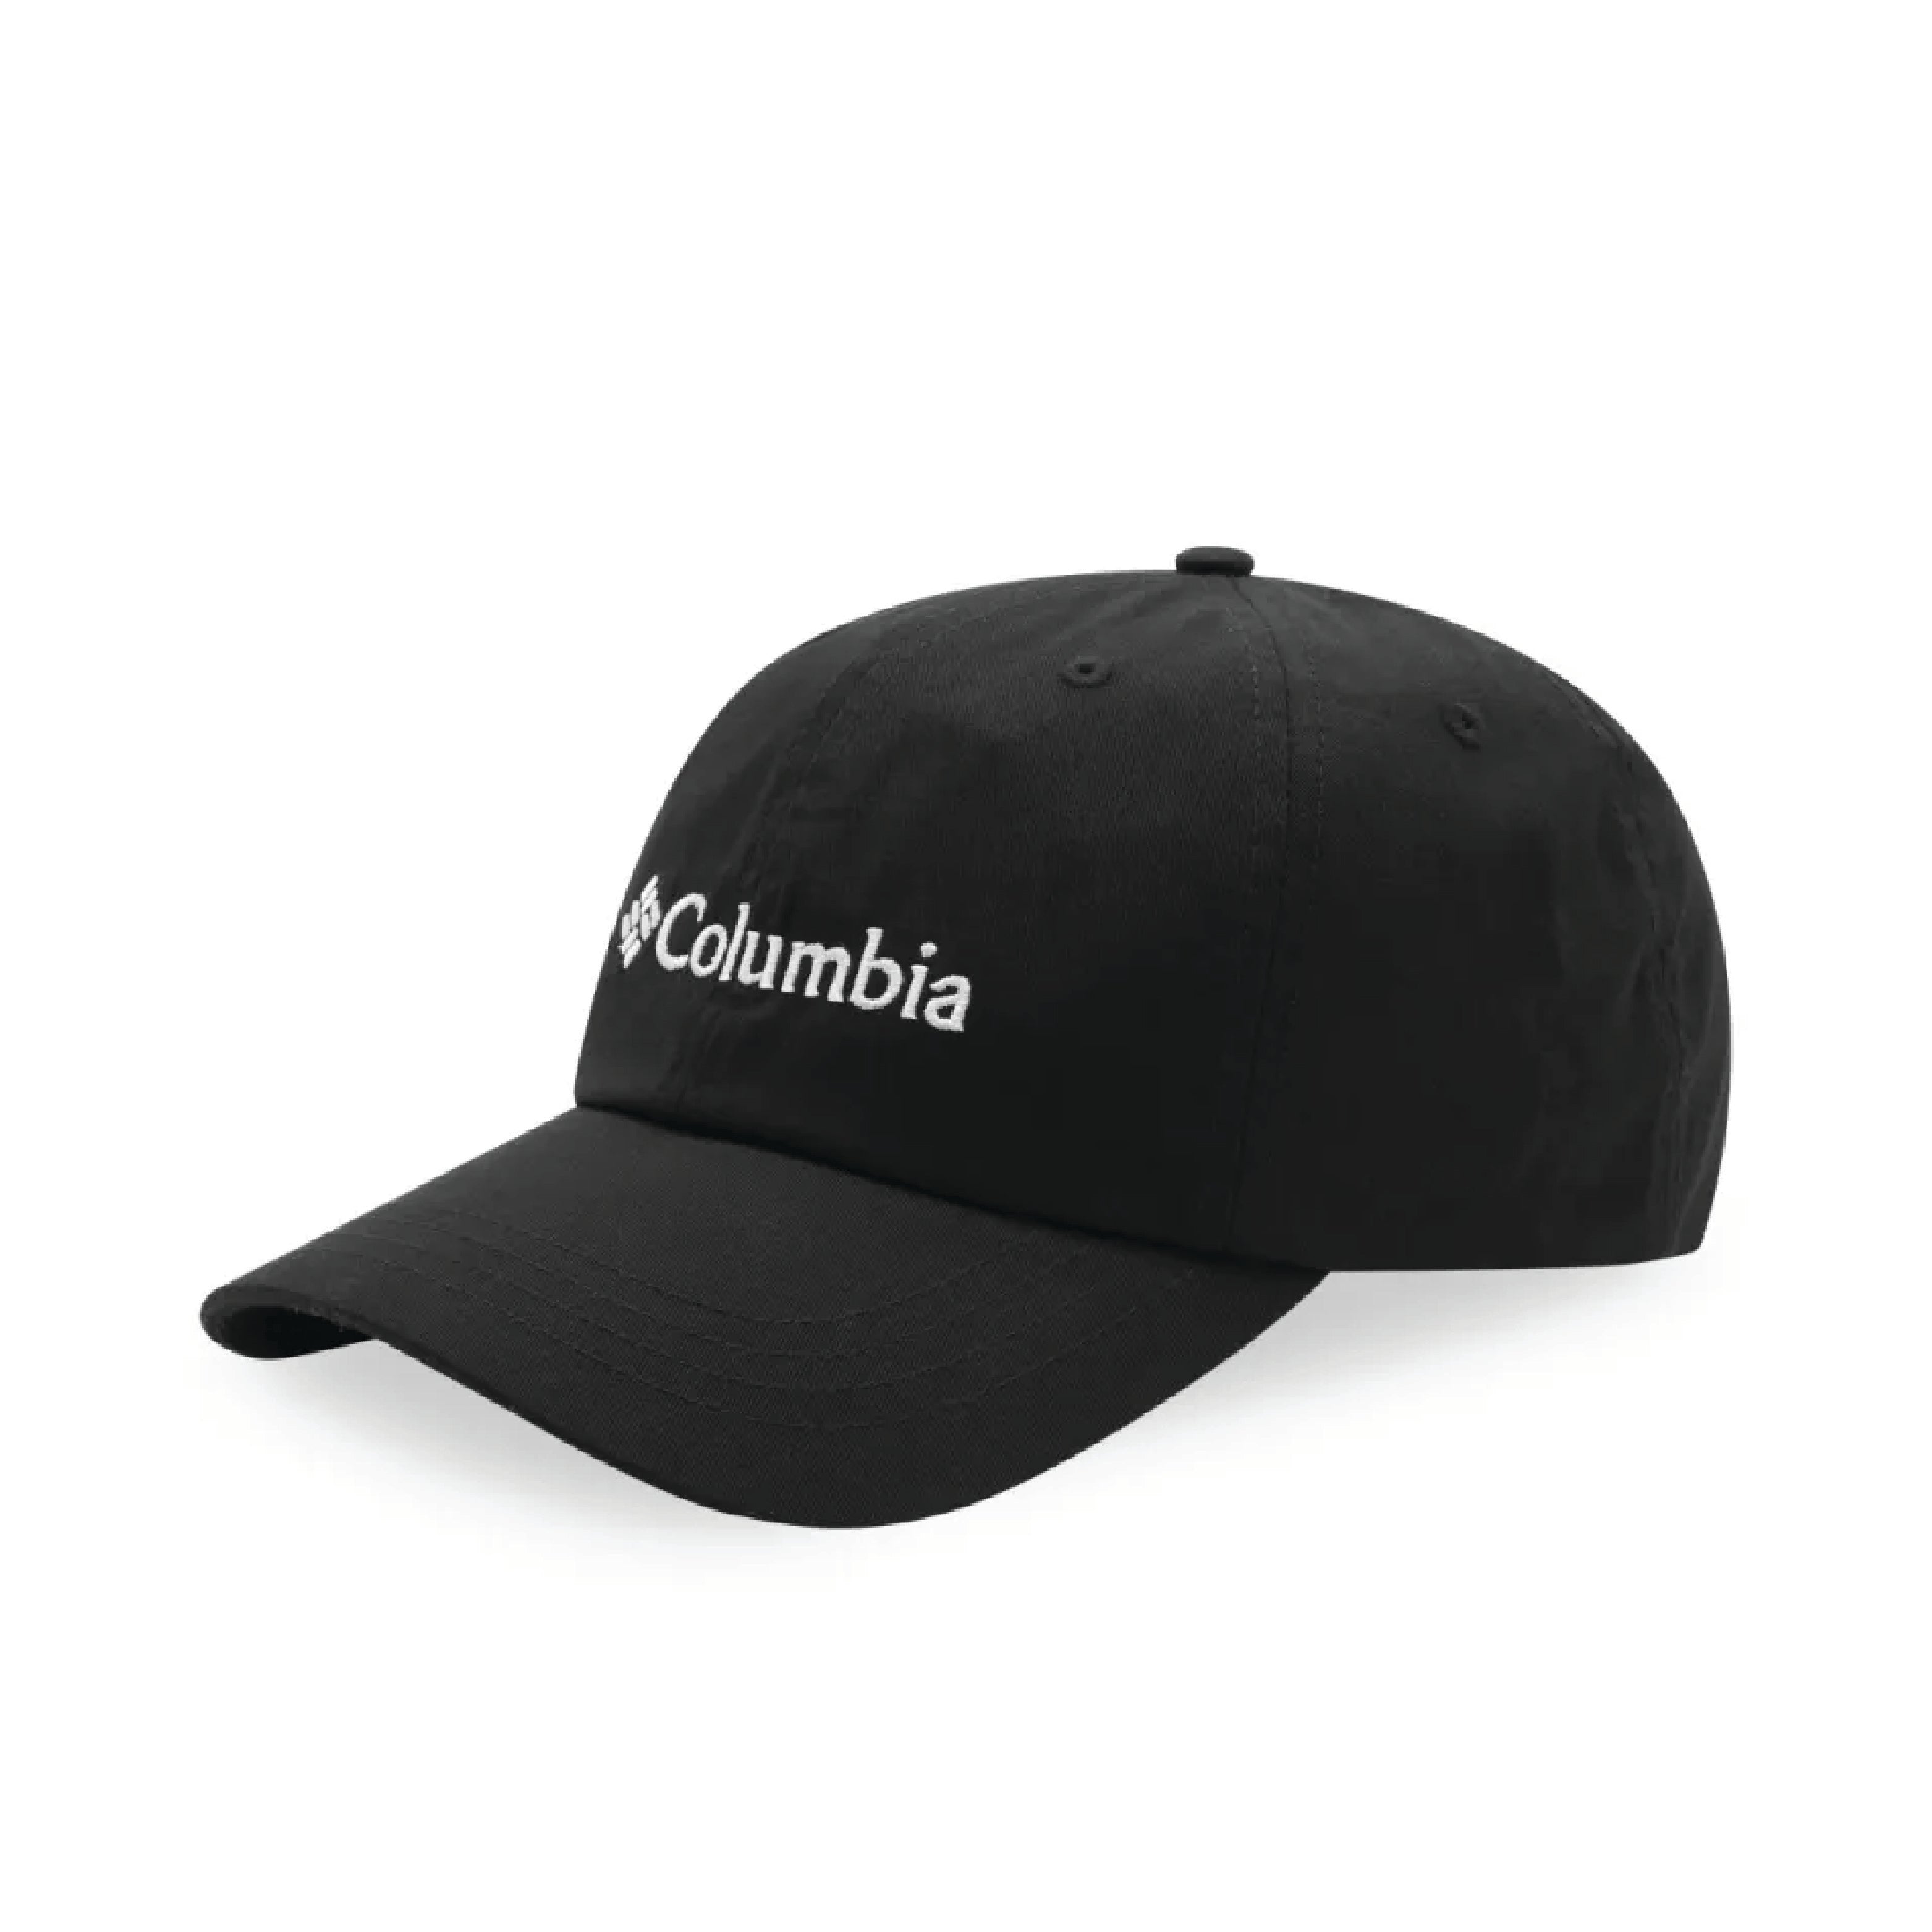 Columbia Roc II Logo Cap Black & White